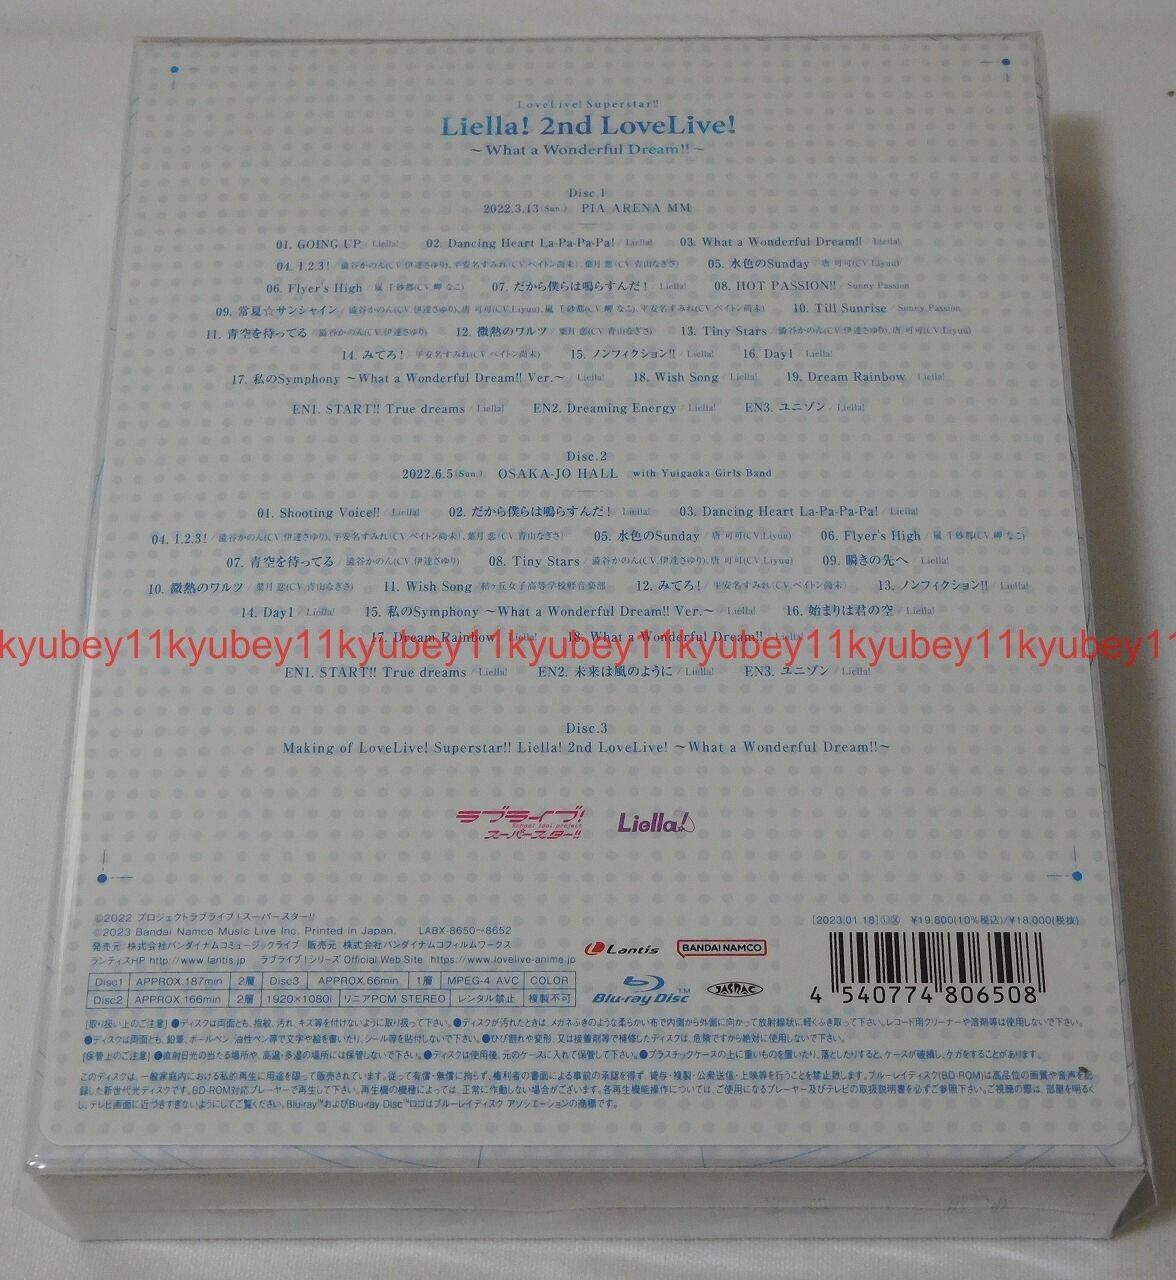 Love Live Superstar Liella 2nd LoveLive What a Wonderful Dream Blu-ray Box  Japan 4540774806508 | eBay